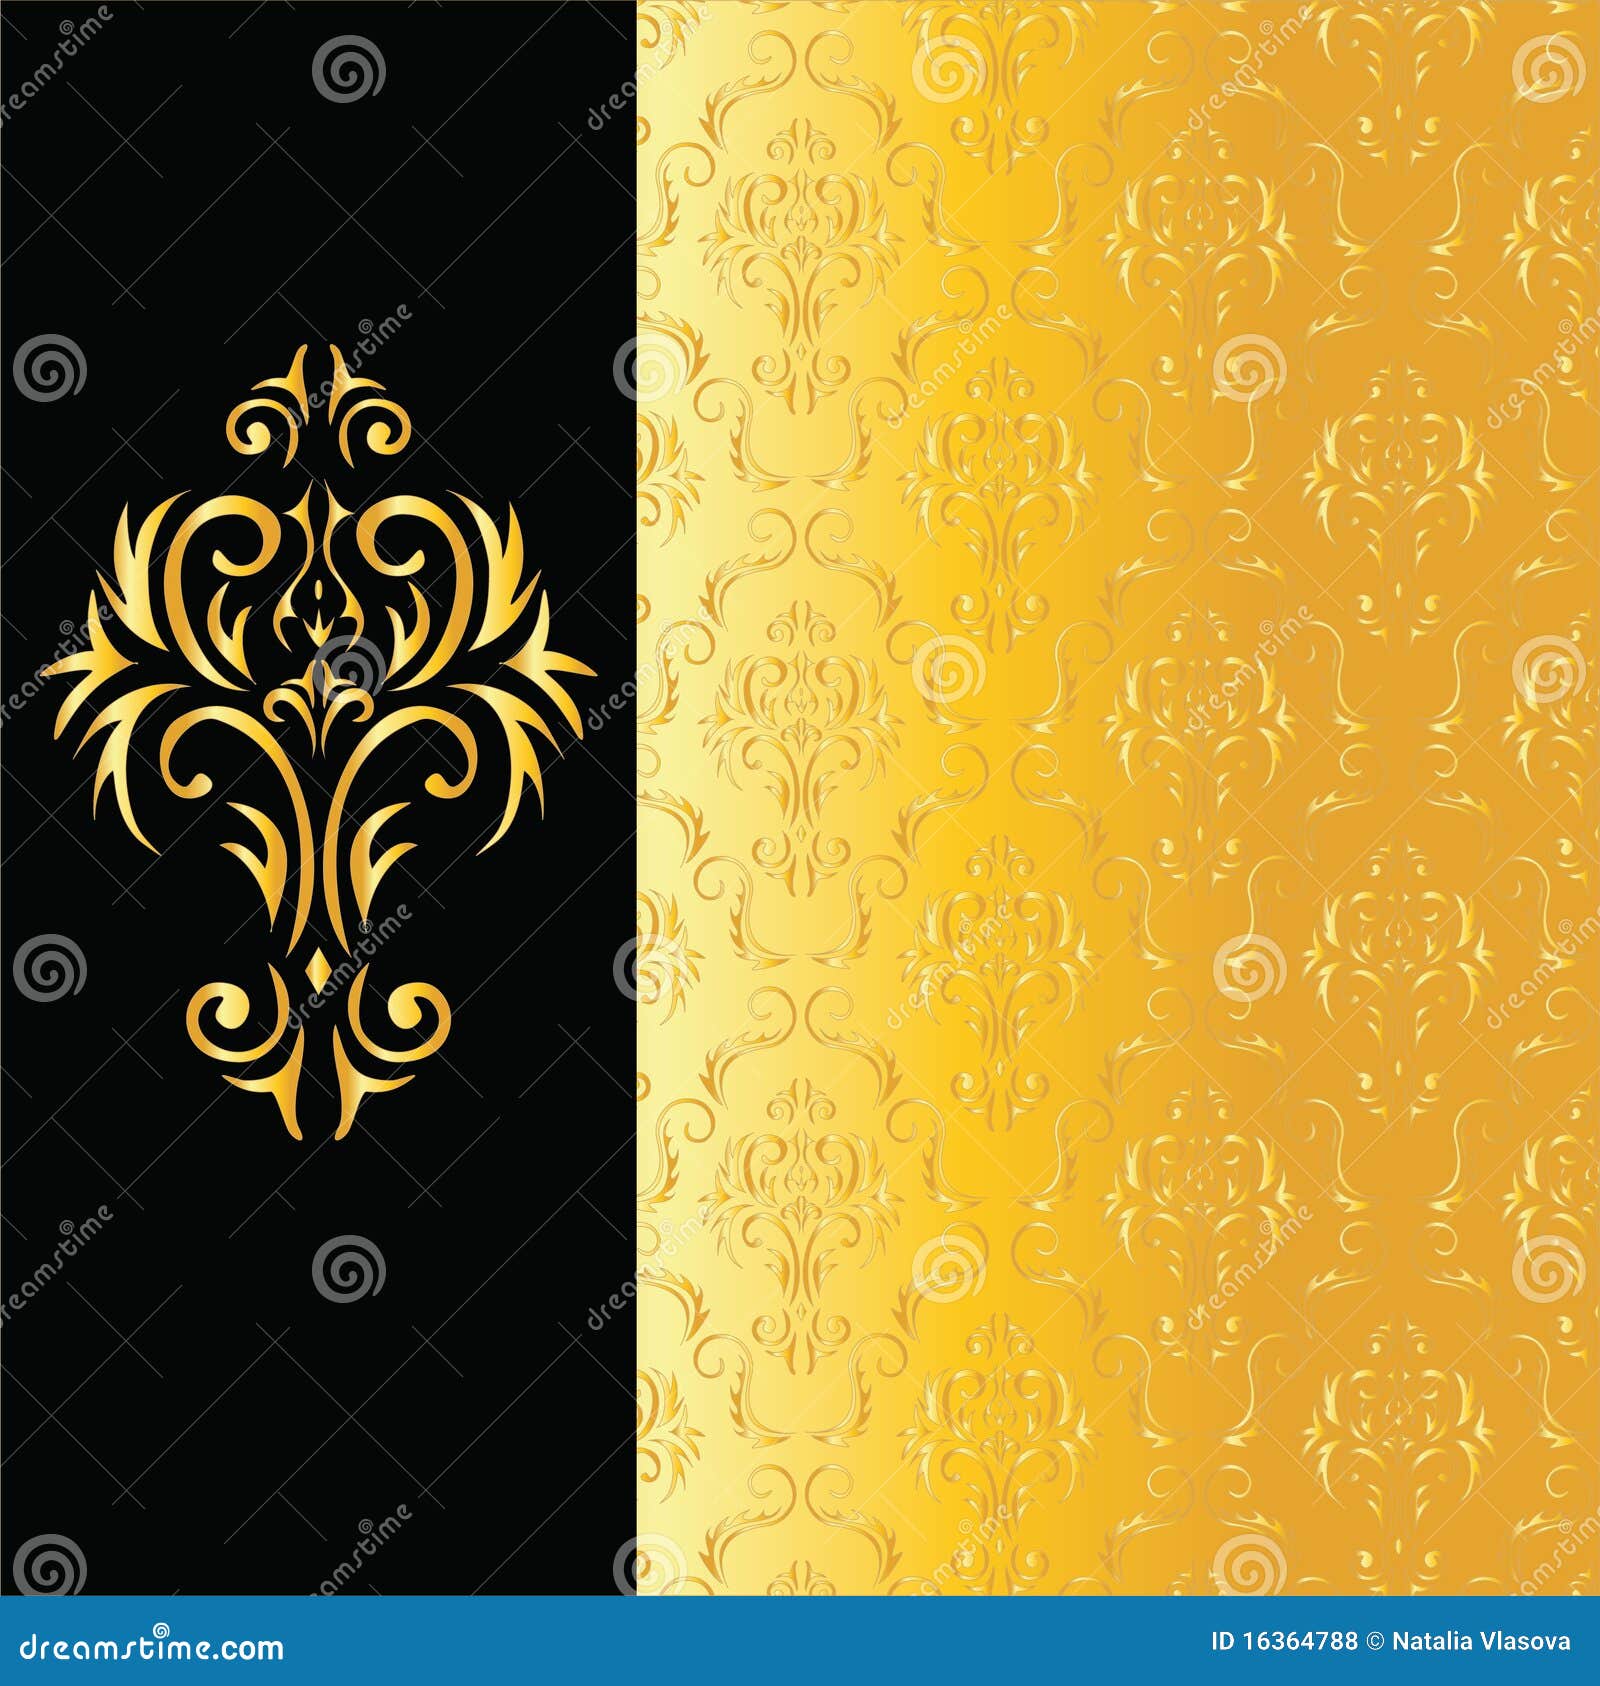 Elegant Black And Gold Background Royalty Free Stock Photos - Image